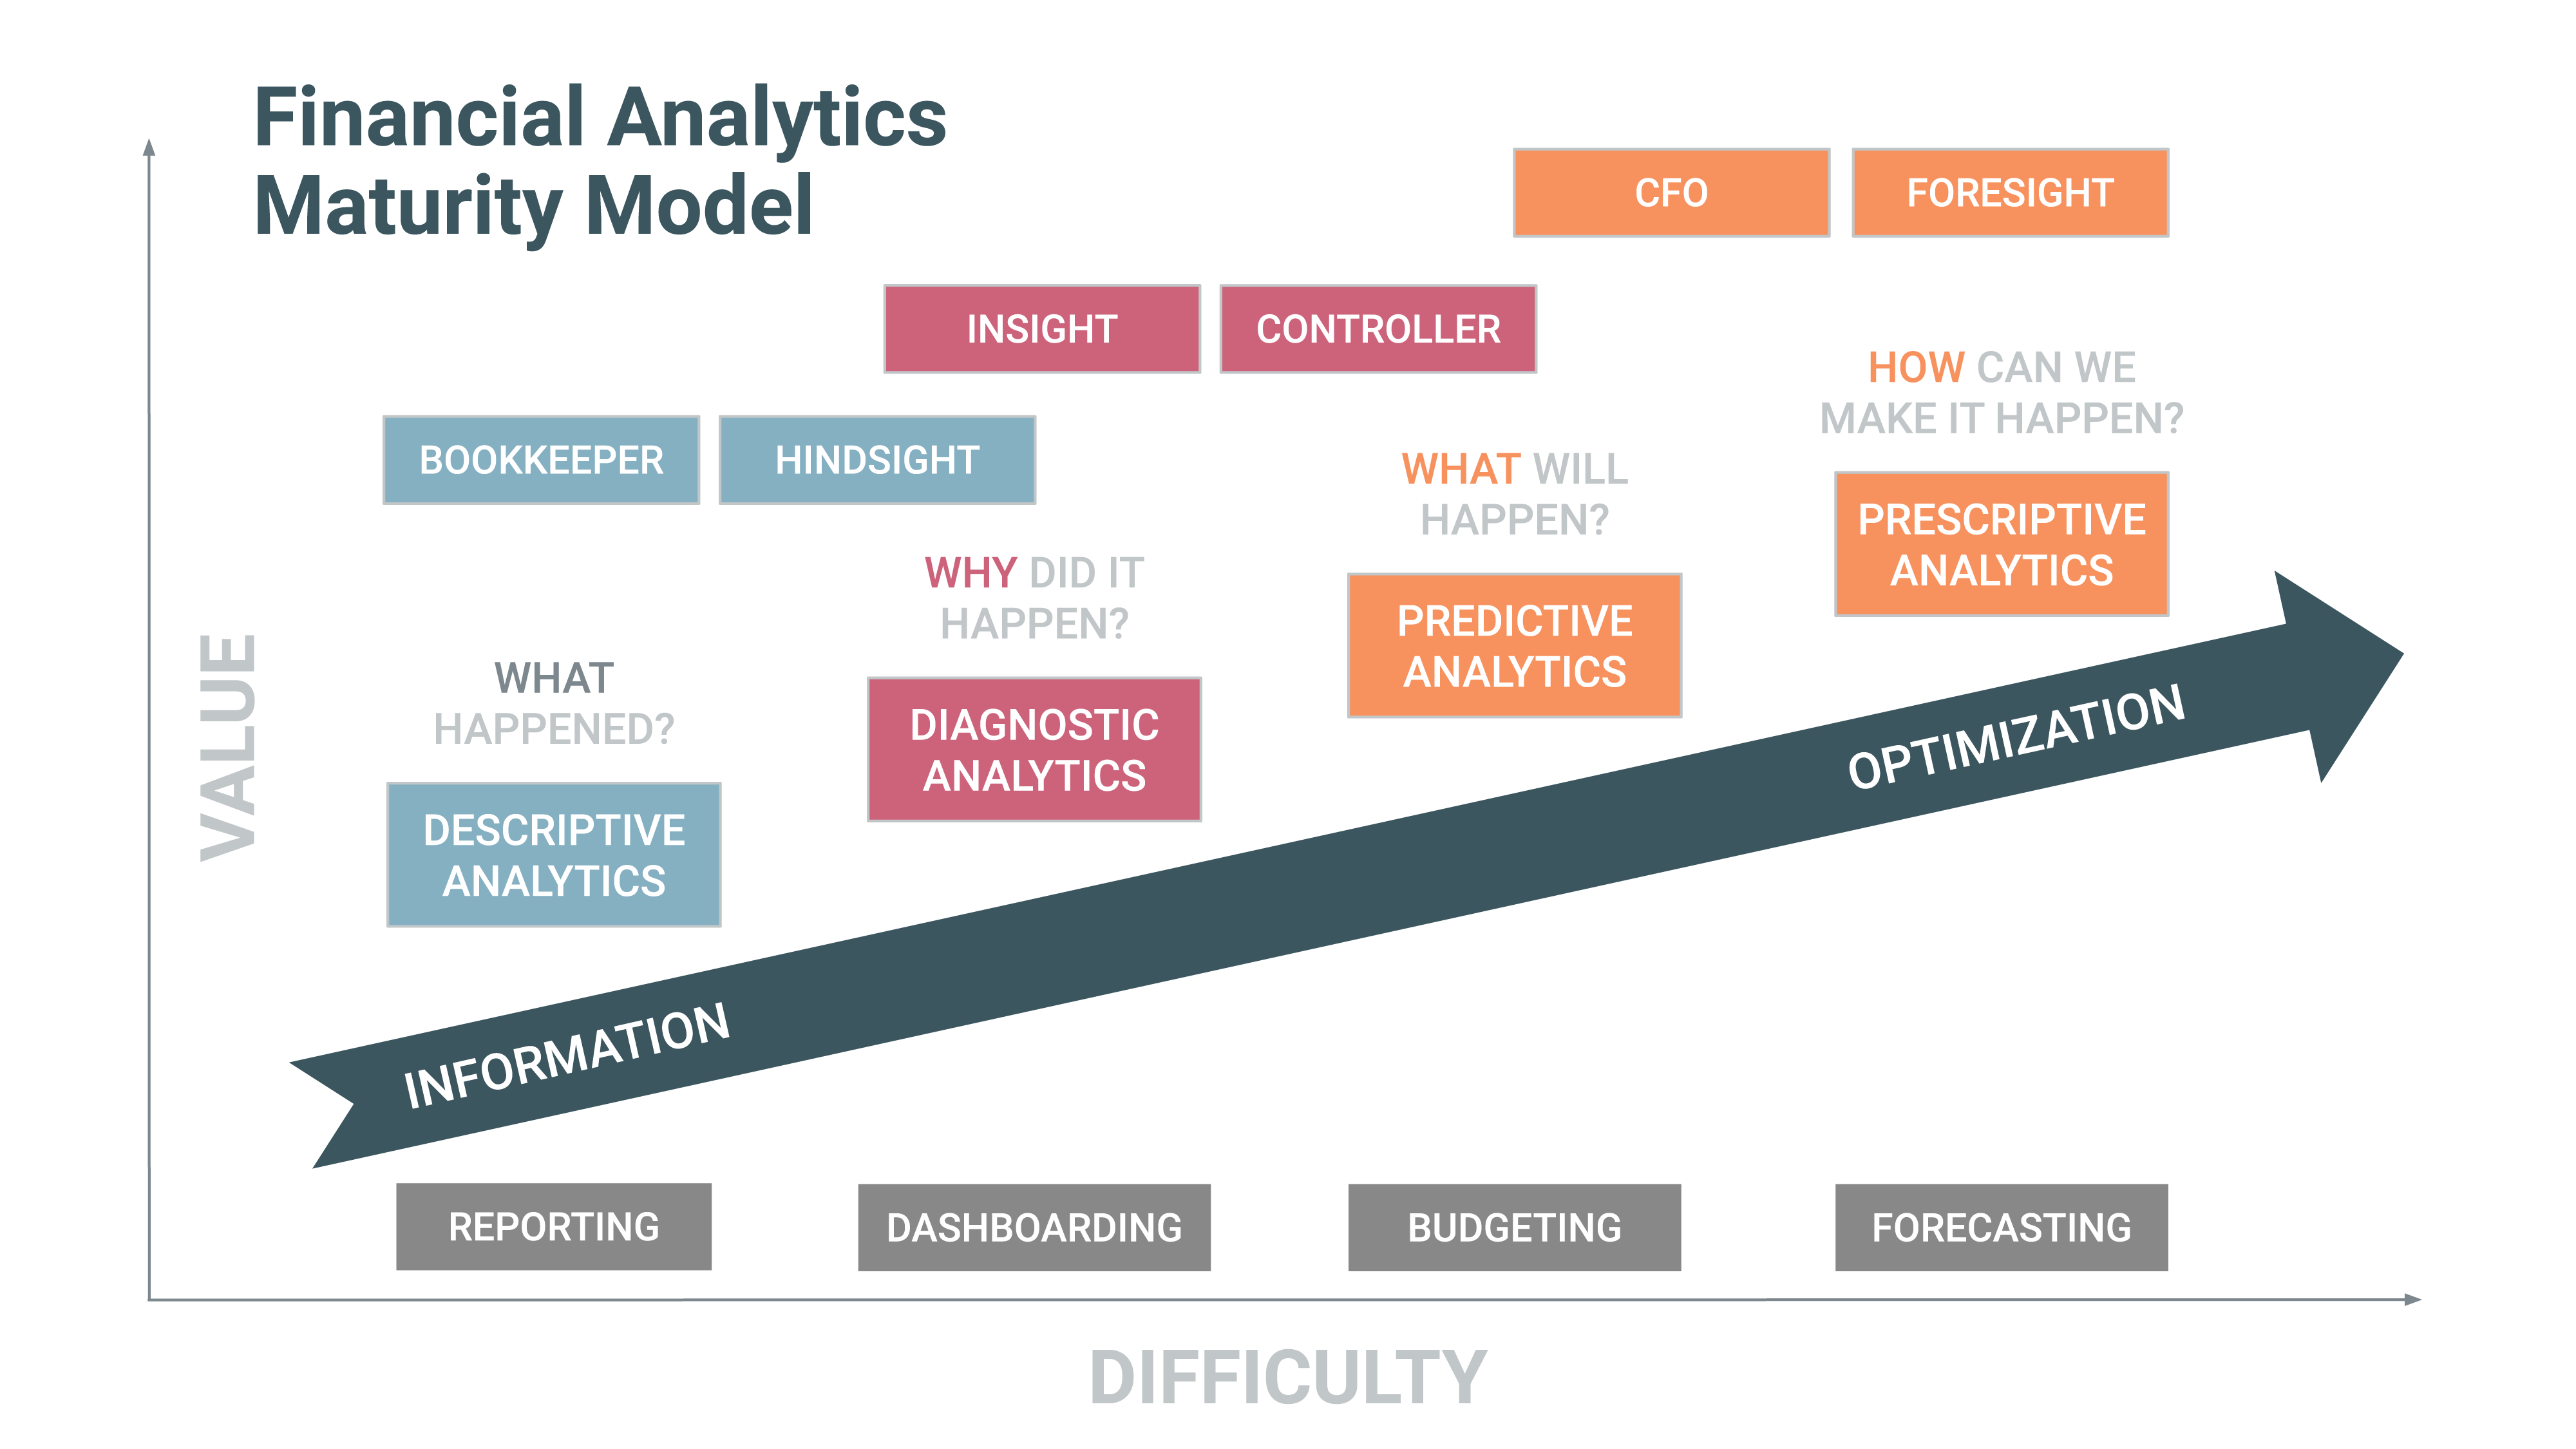 Gartner's Financial Analytics Maturity Model